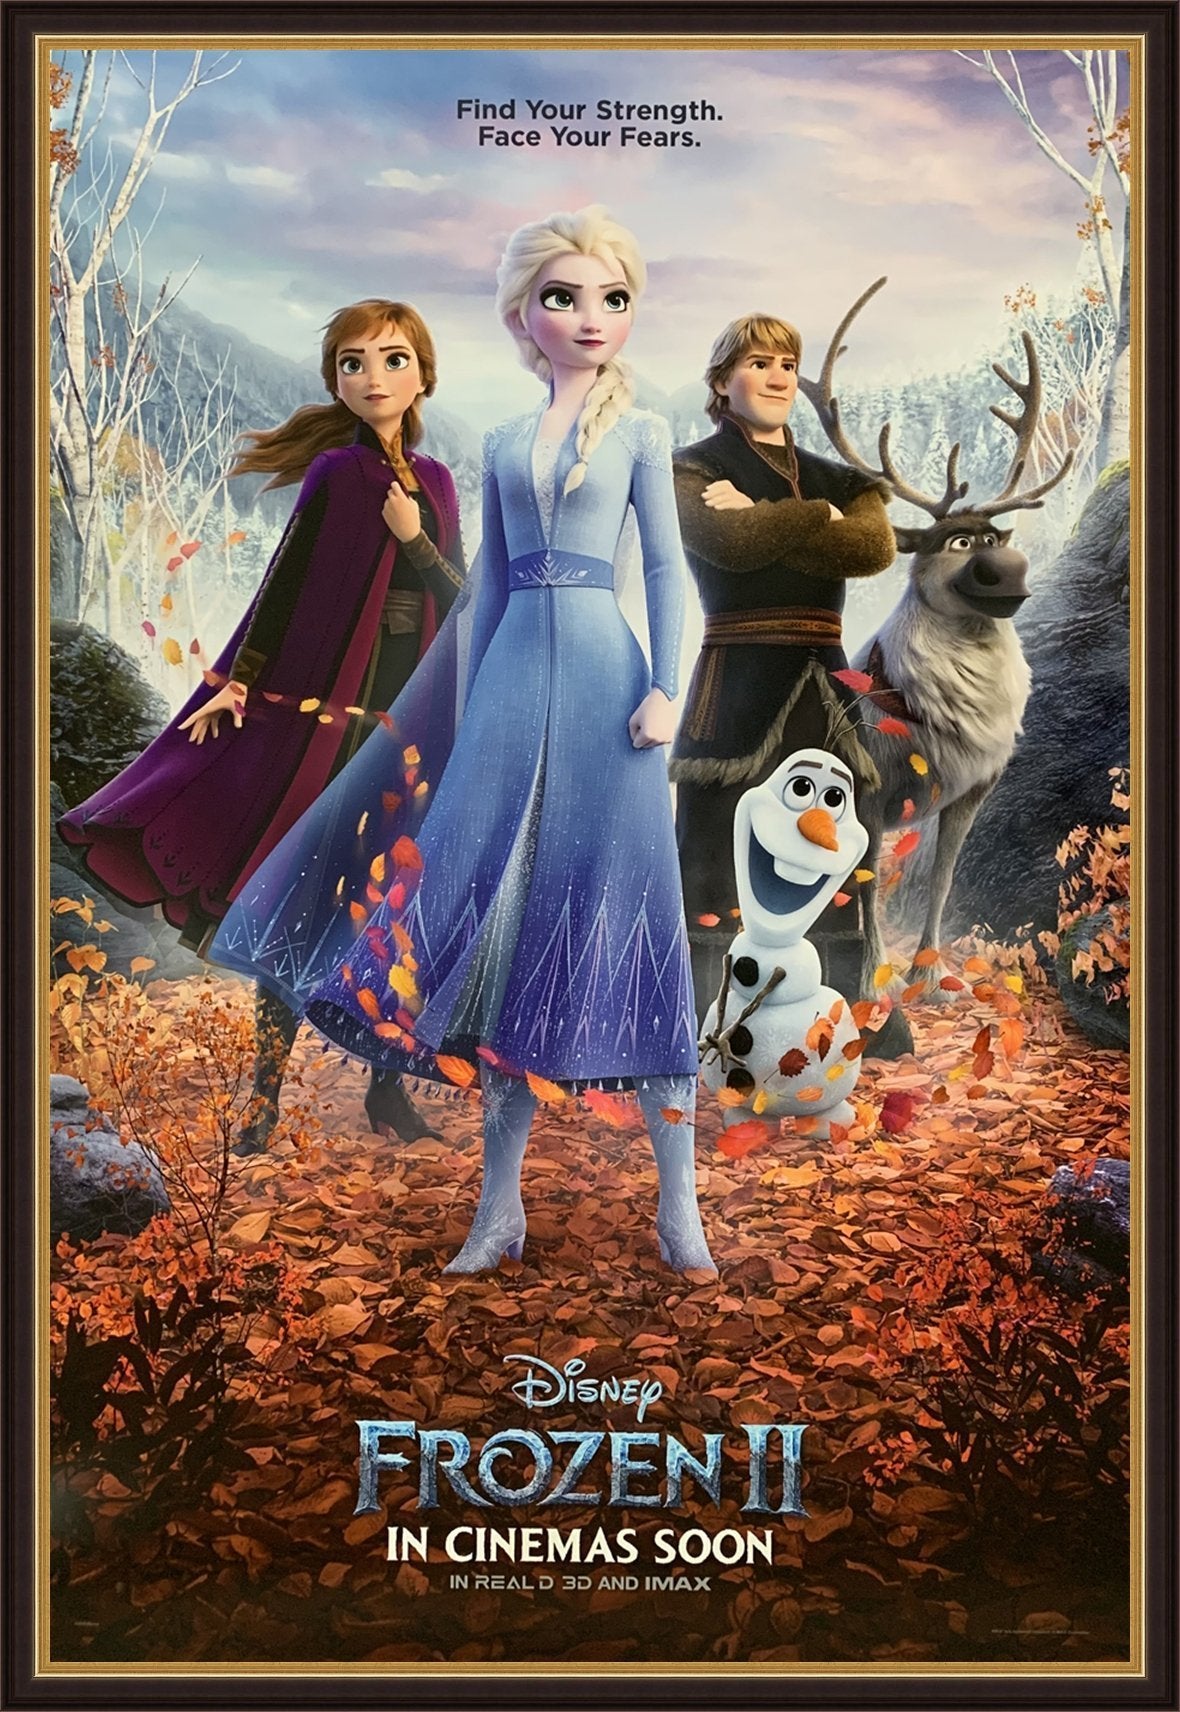 An original movie poster for the Disney film Frozen II / 2